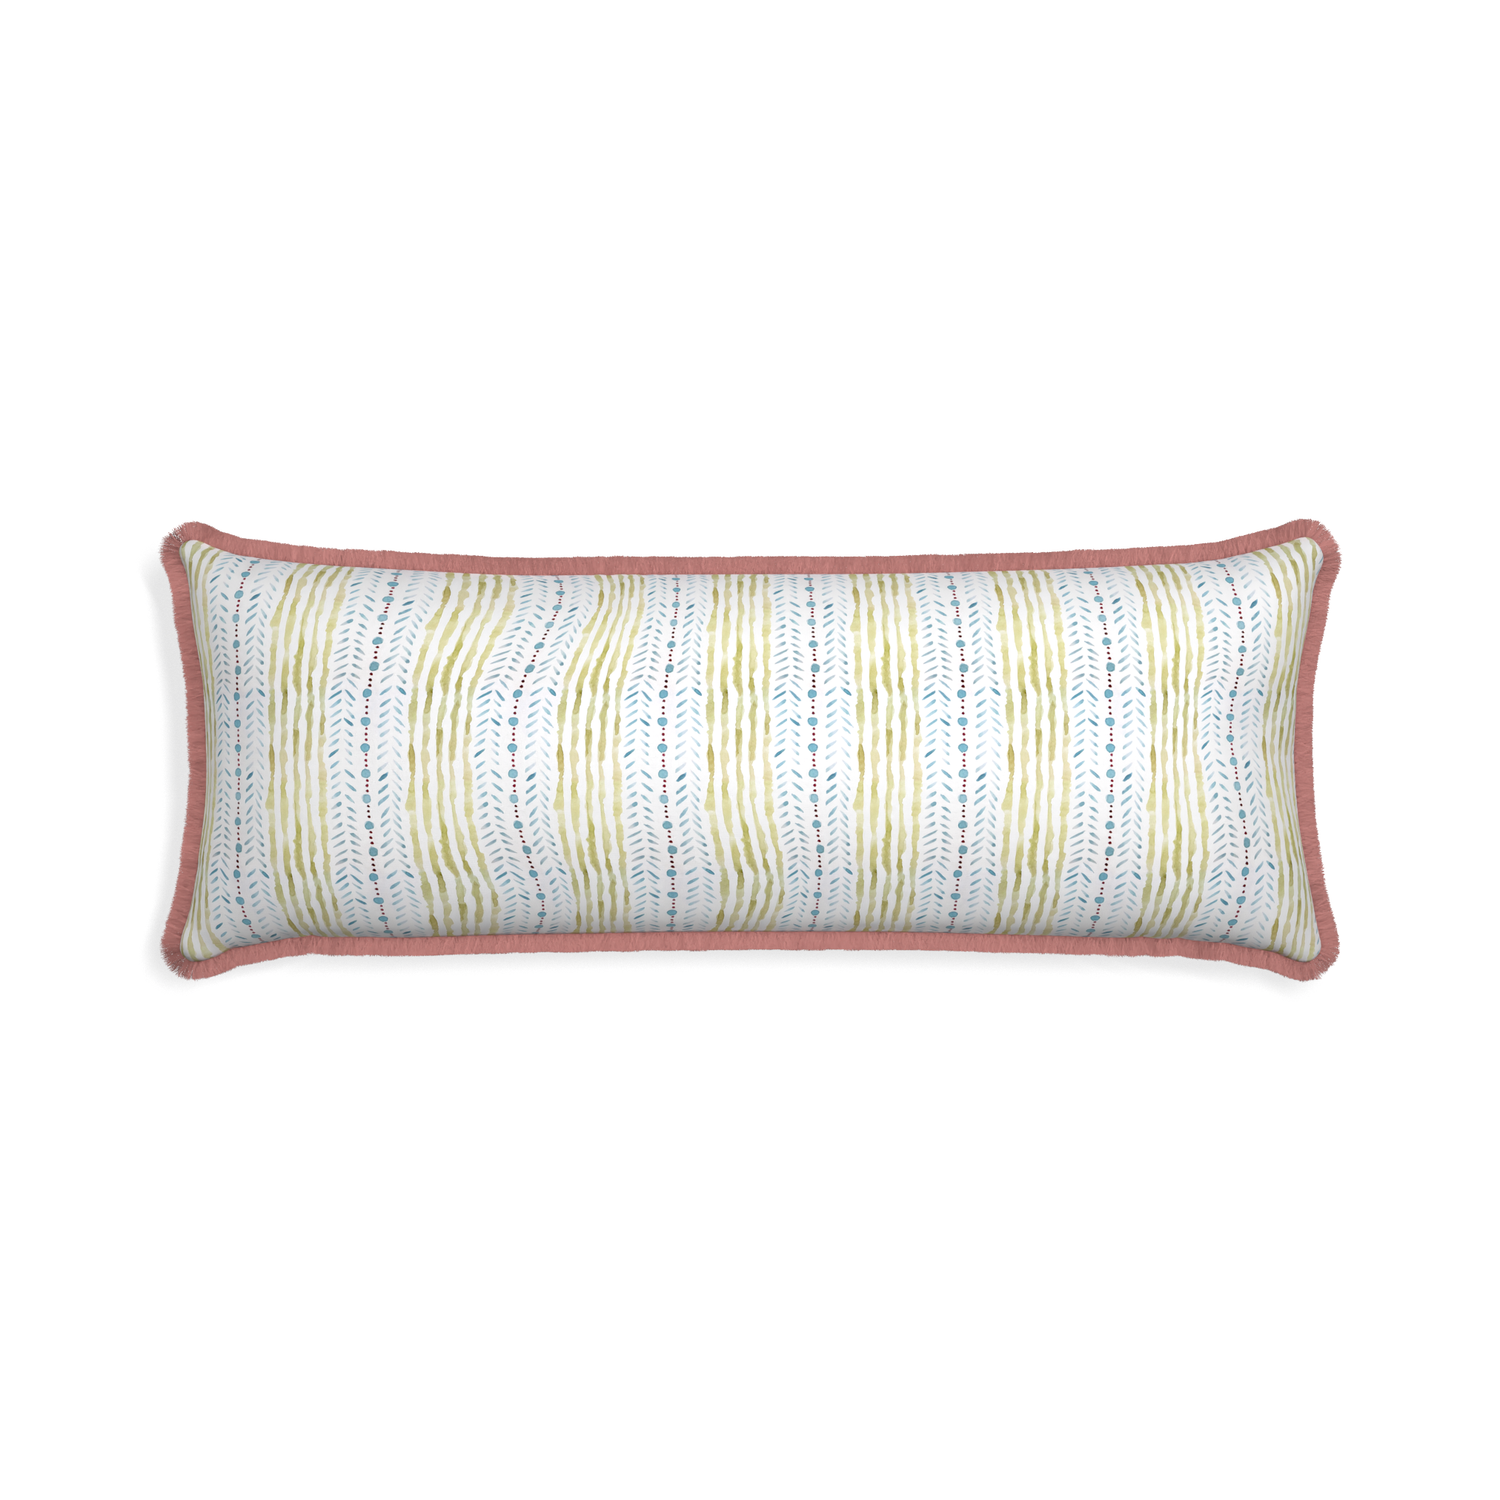 Xl-lumbar julia custom pillow with d fringe on white background